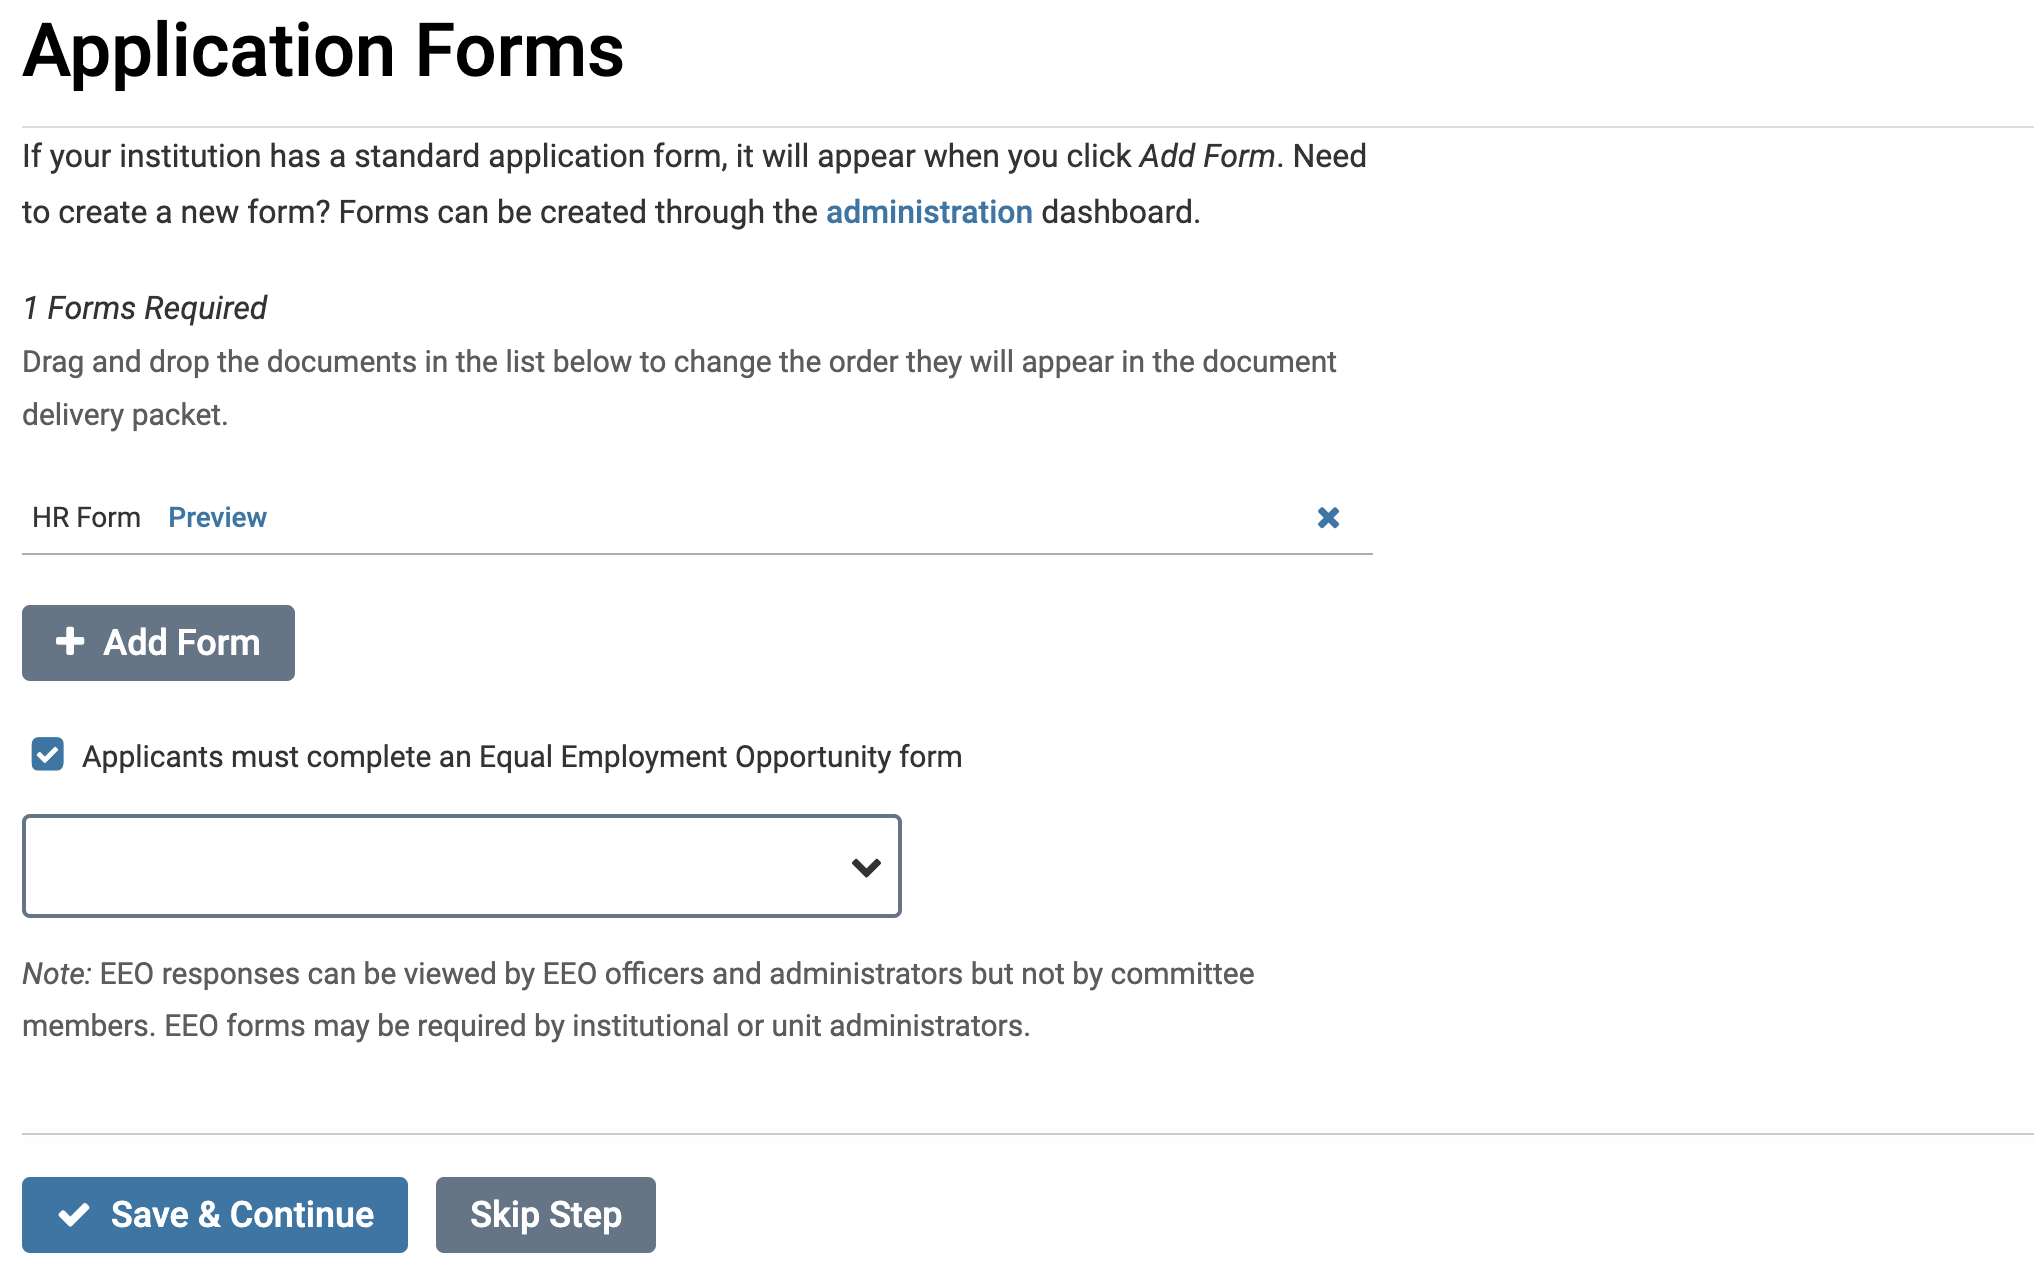 Application Forms selected on navigation menu